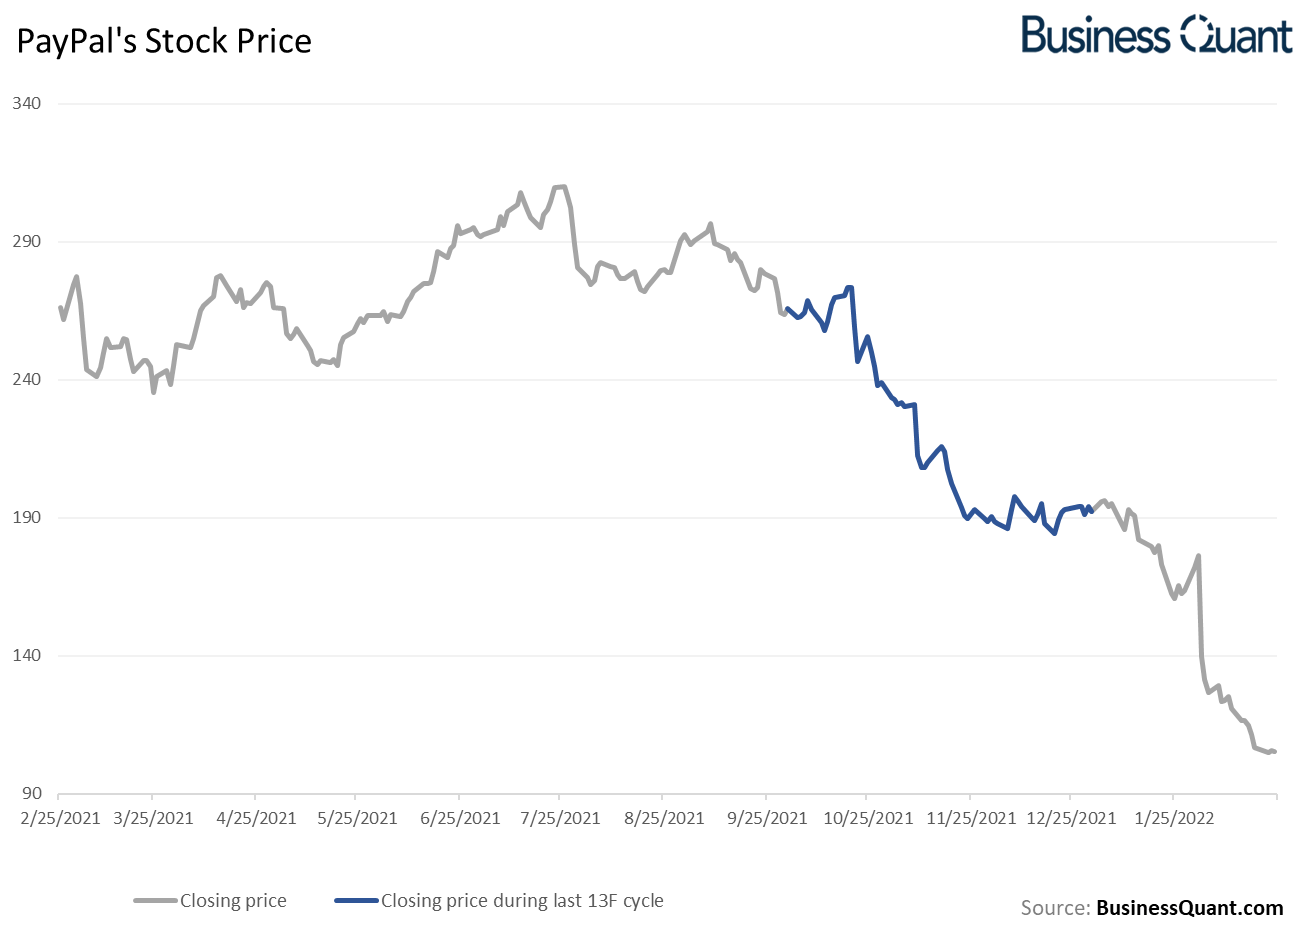 2005 paypal stock price